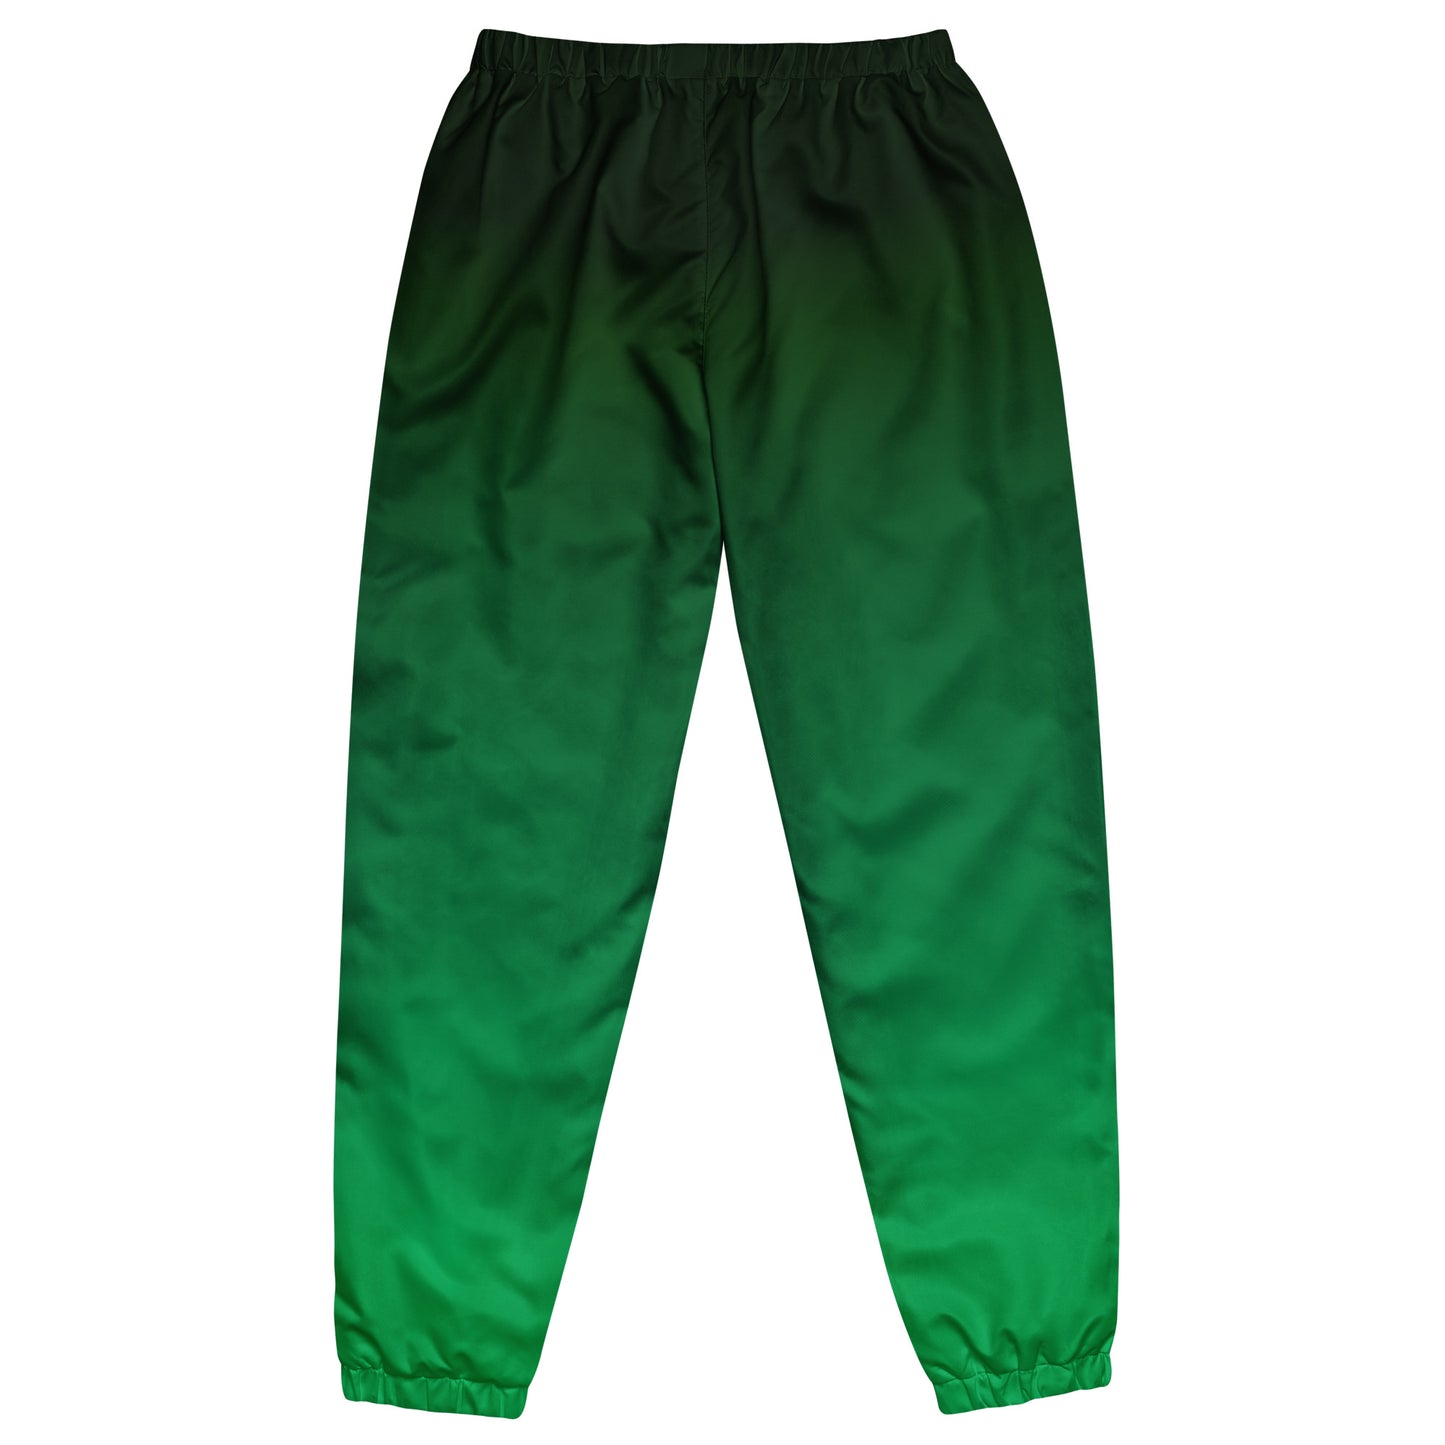 Gradient Black to Green Unisex track pants